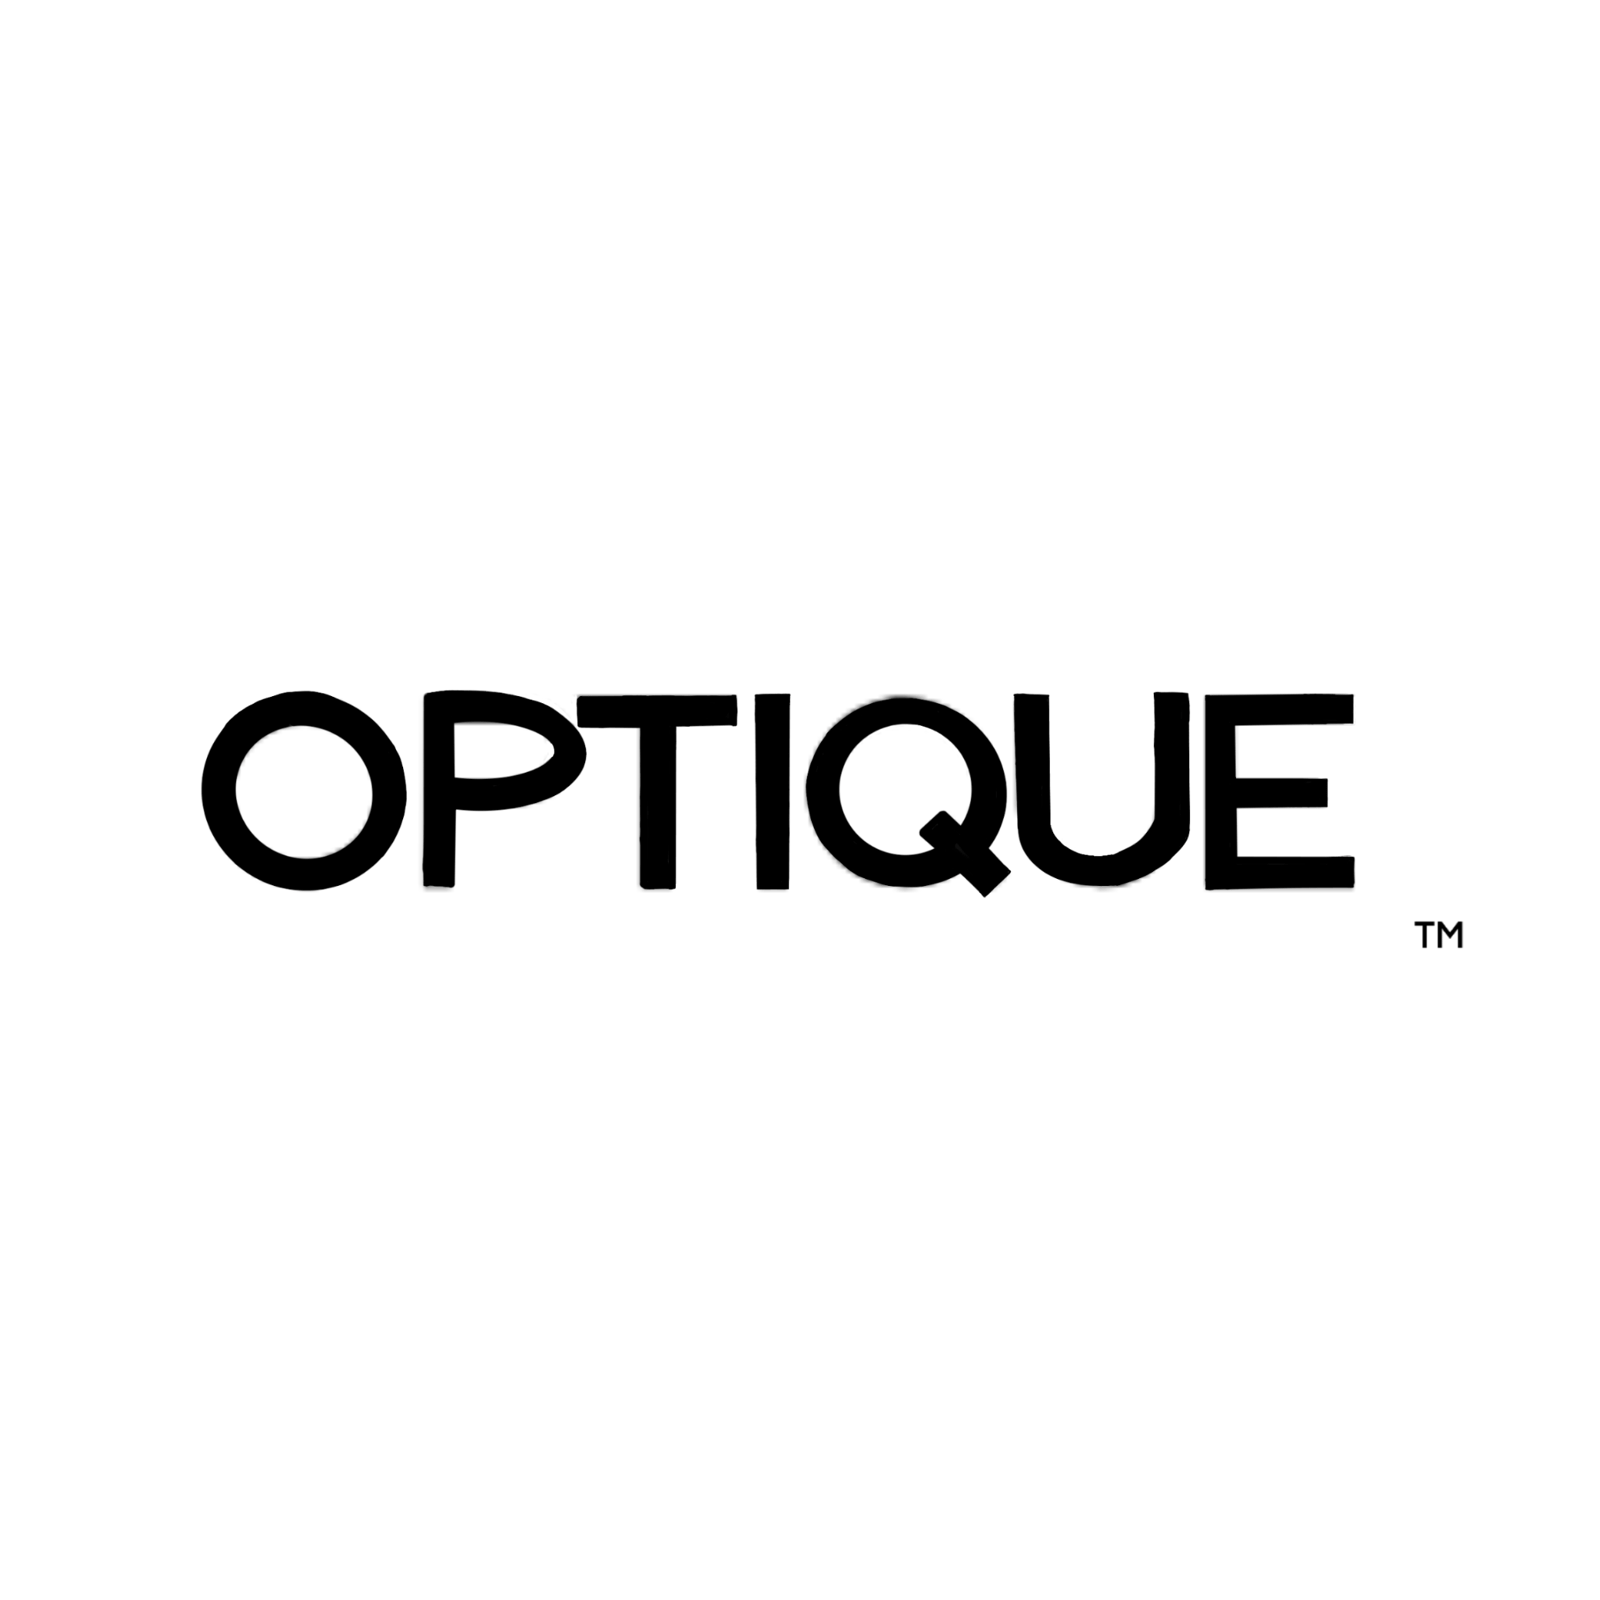 Optique.us's account image